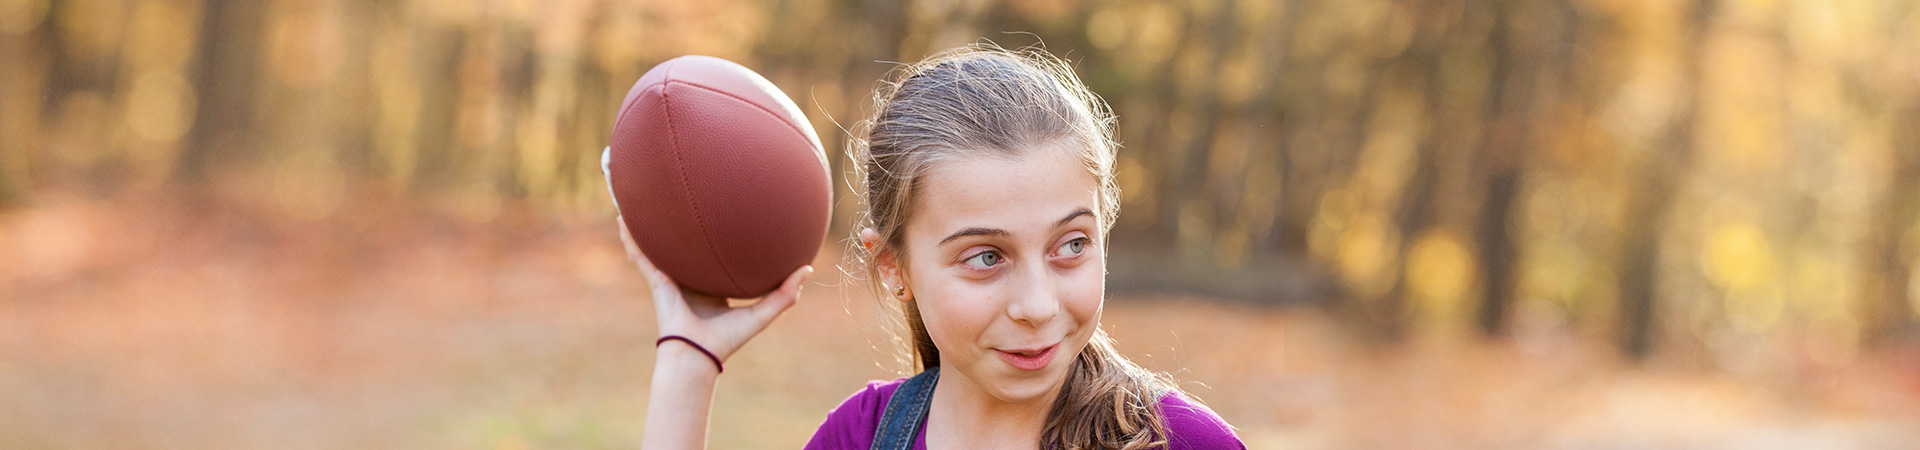  girl throwing football 